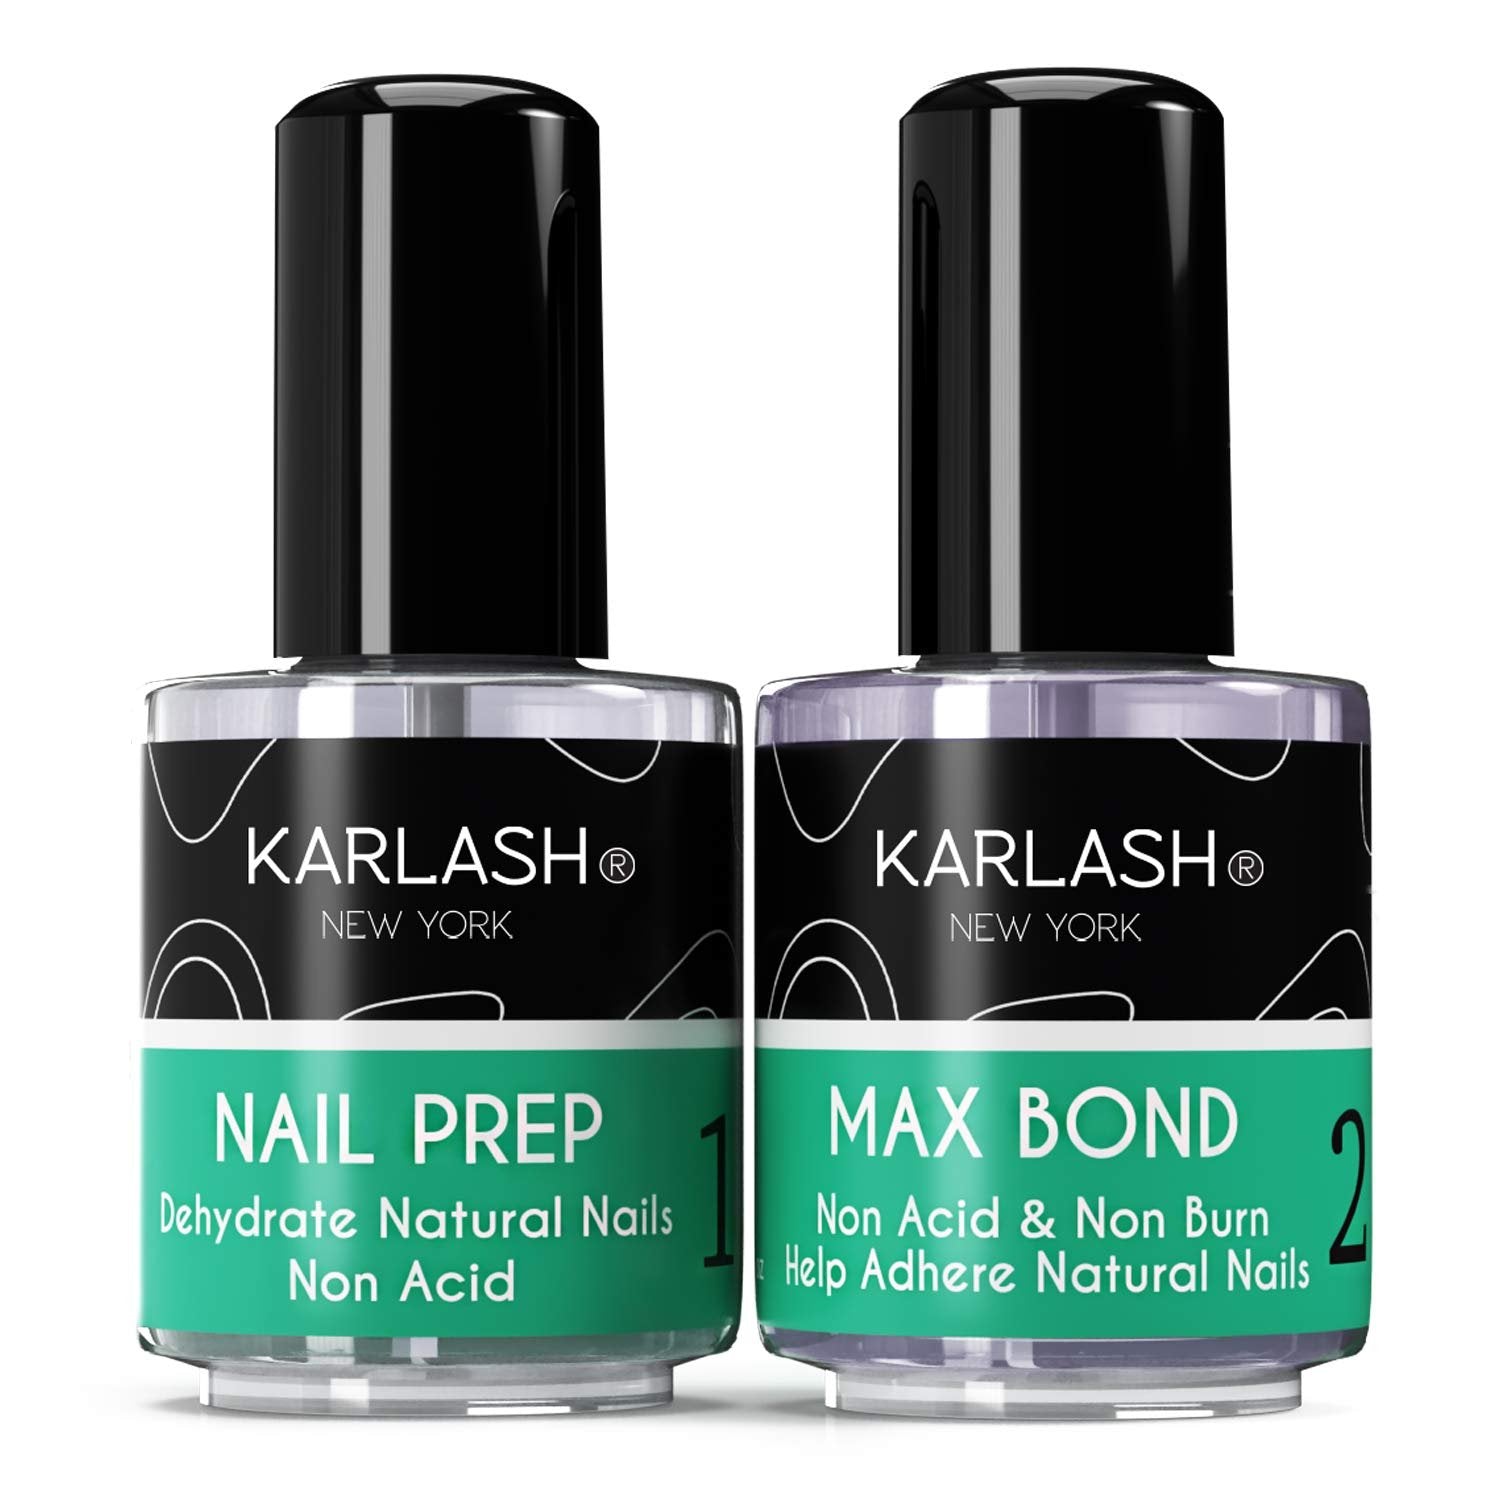 Karlash Professional Nail Prep Bond Primer & Prep dehydrate 0.5 oz Help Adhere Natural Nails Non Acid